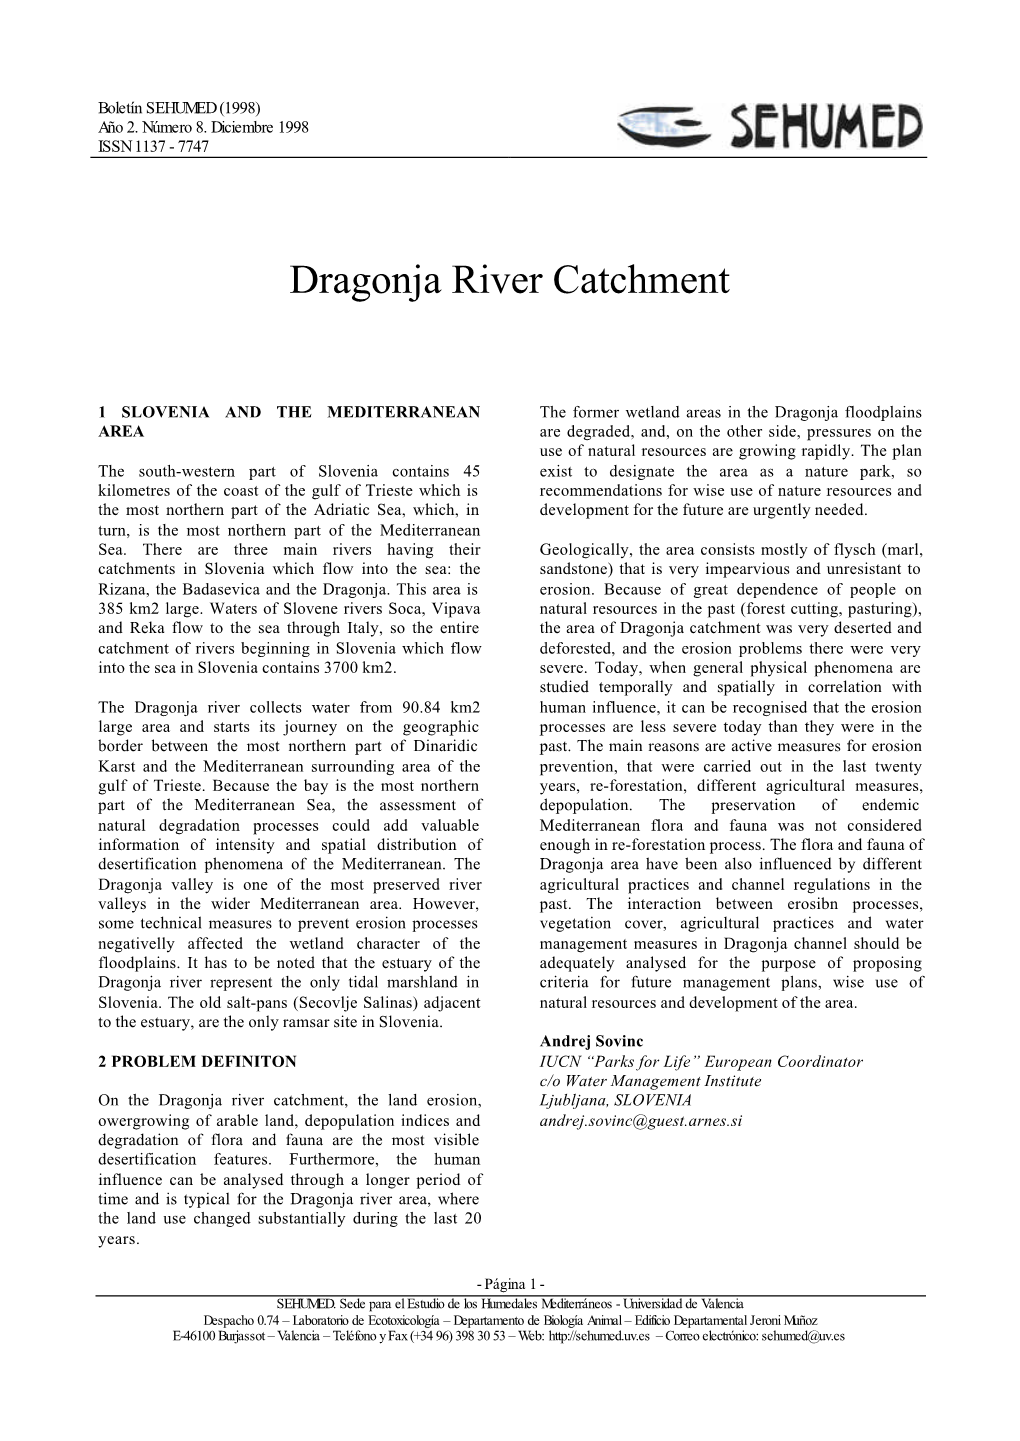 Dragonja River Catchment